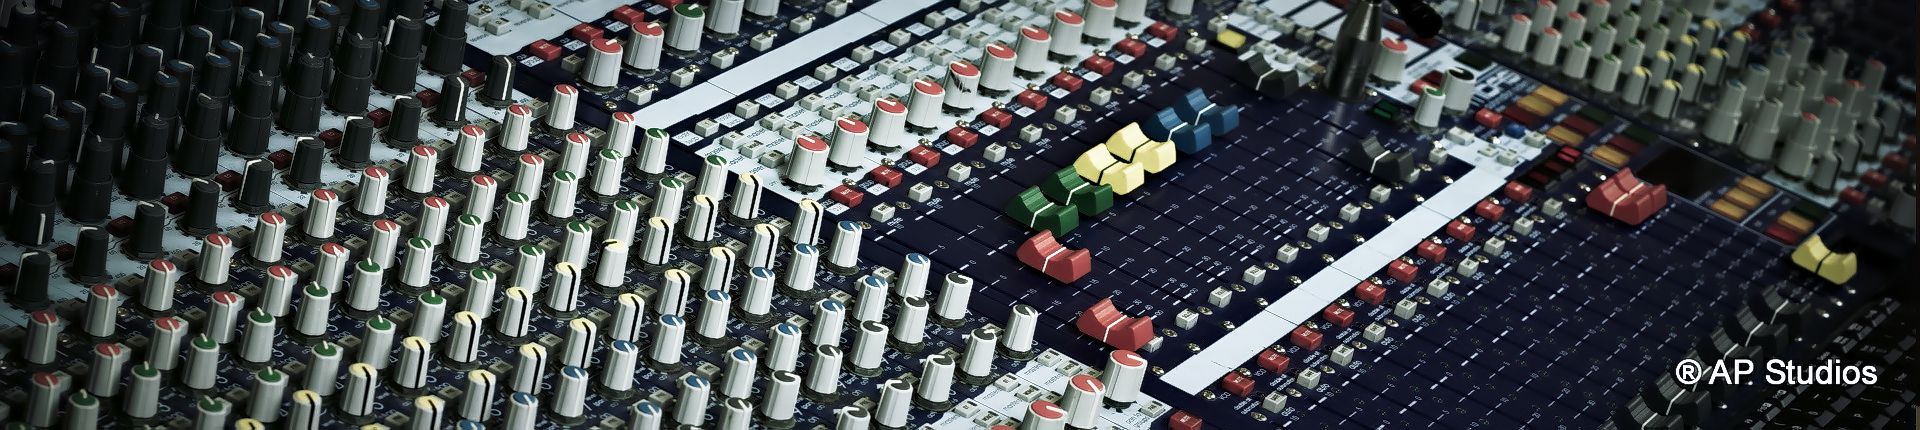 AP Recording Studios Dublin Midas Heritage 1000 Mixing Desk